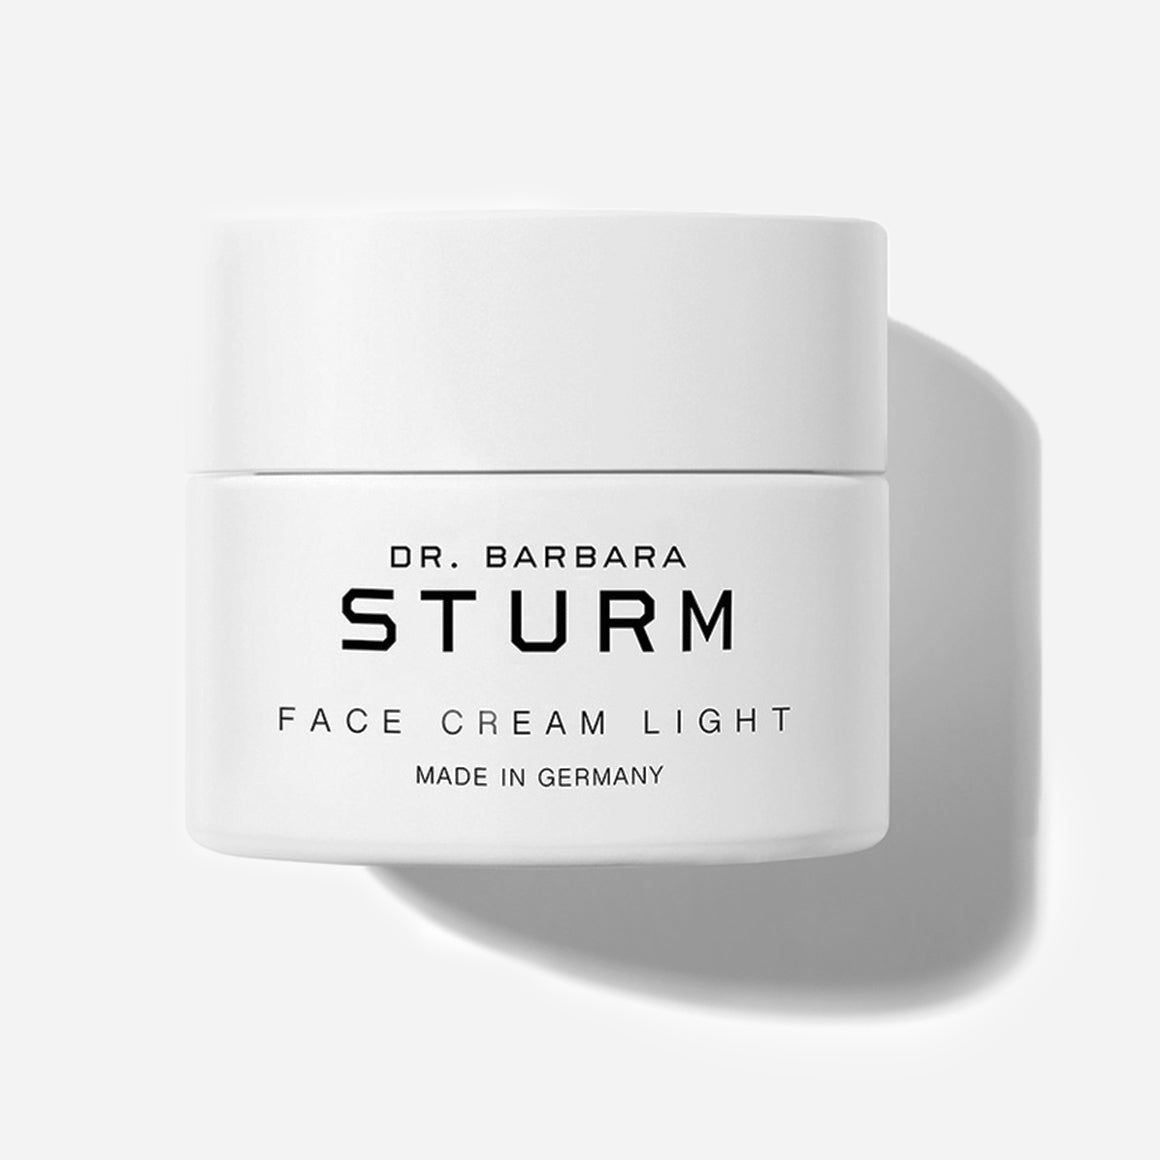 Face Cream Light